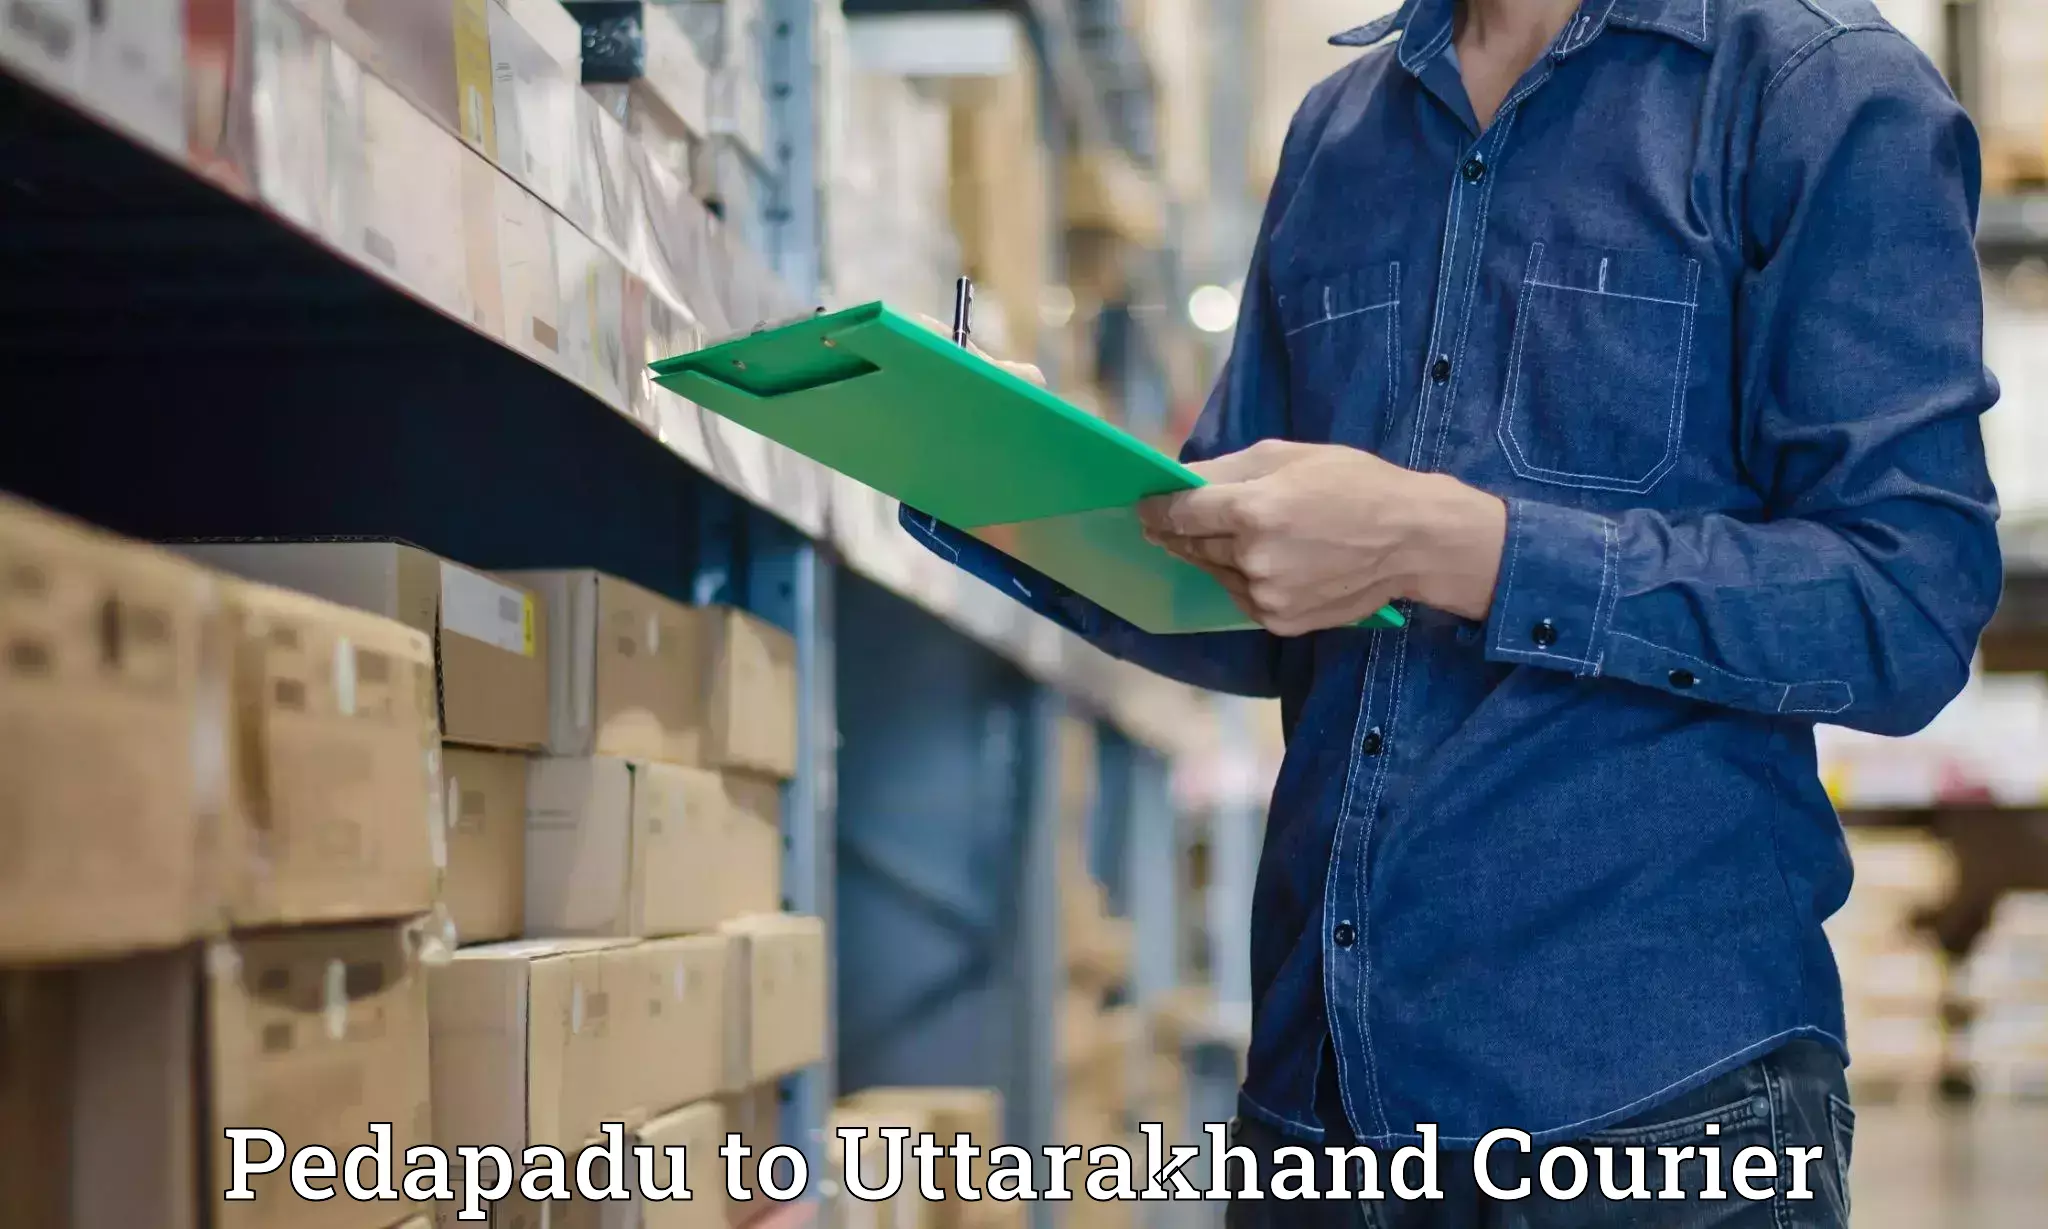 Efficient logistics management Pedapadu to Bageshwar